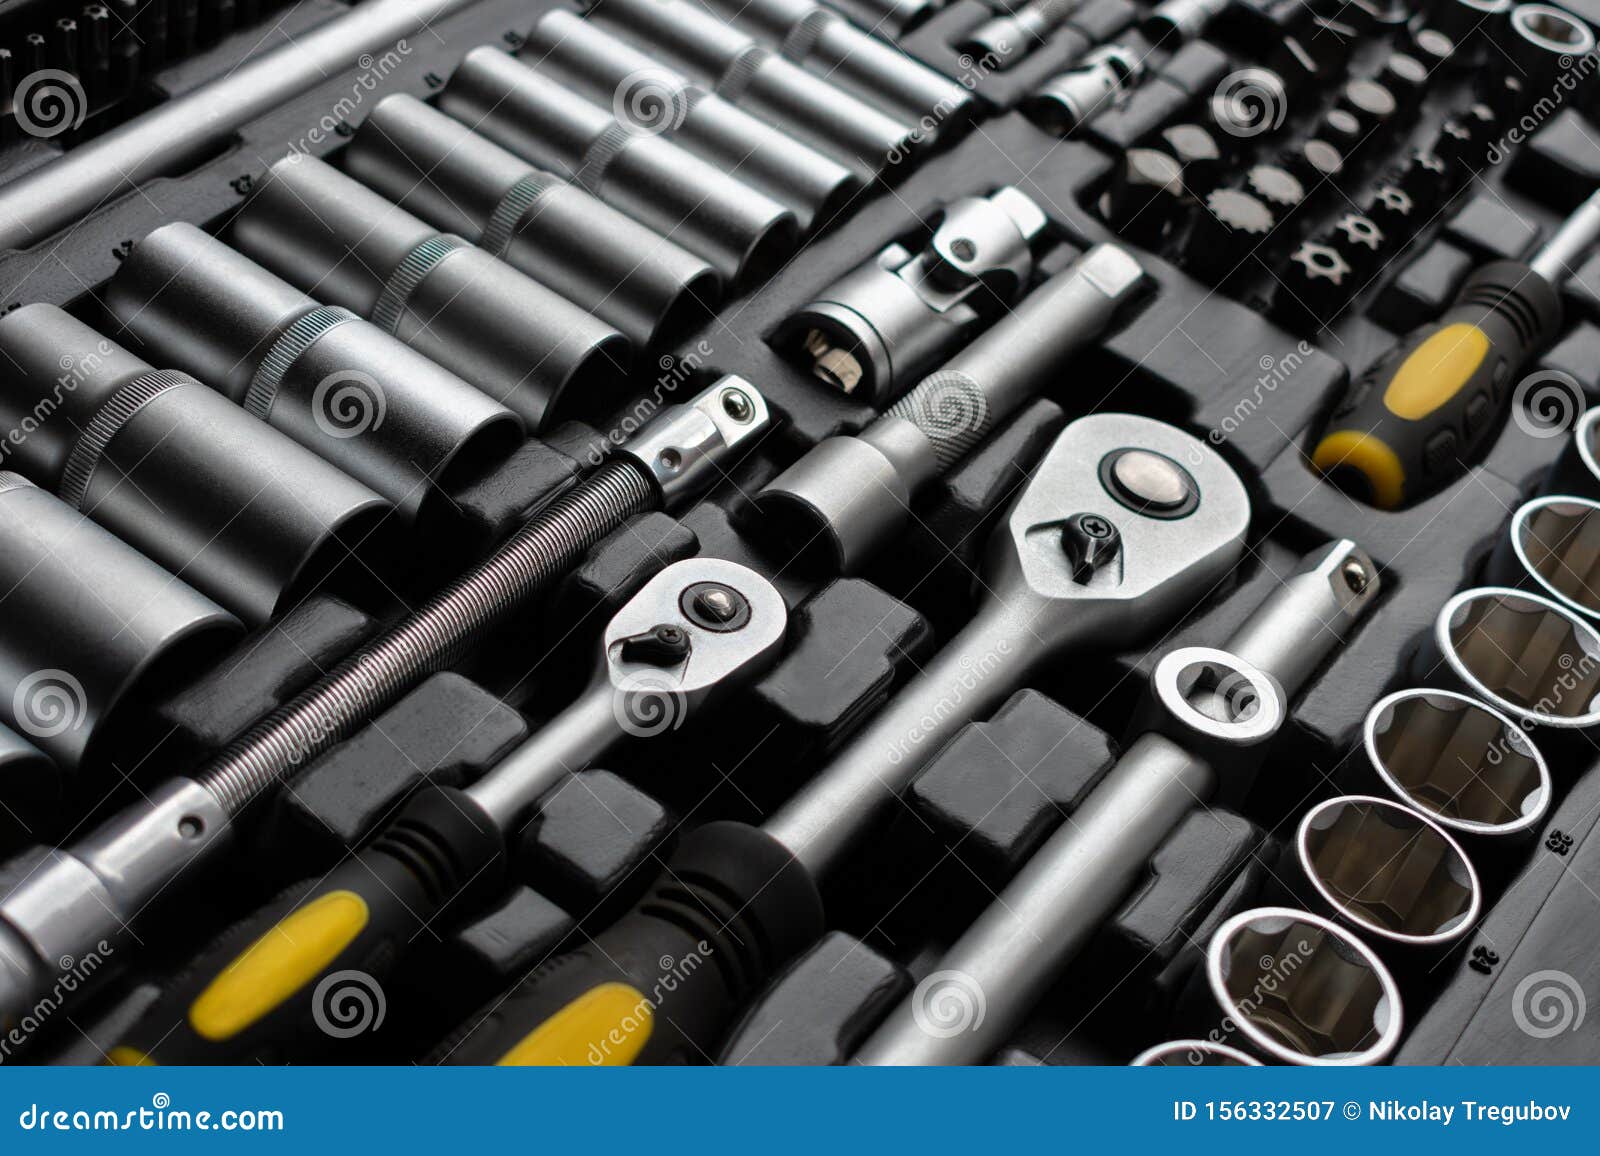 Mechanic tools stock image. Image of closeup, iron, bolt - 62041333